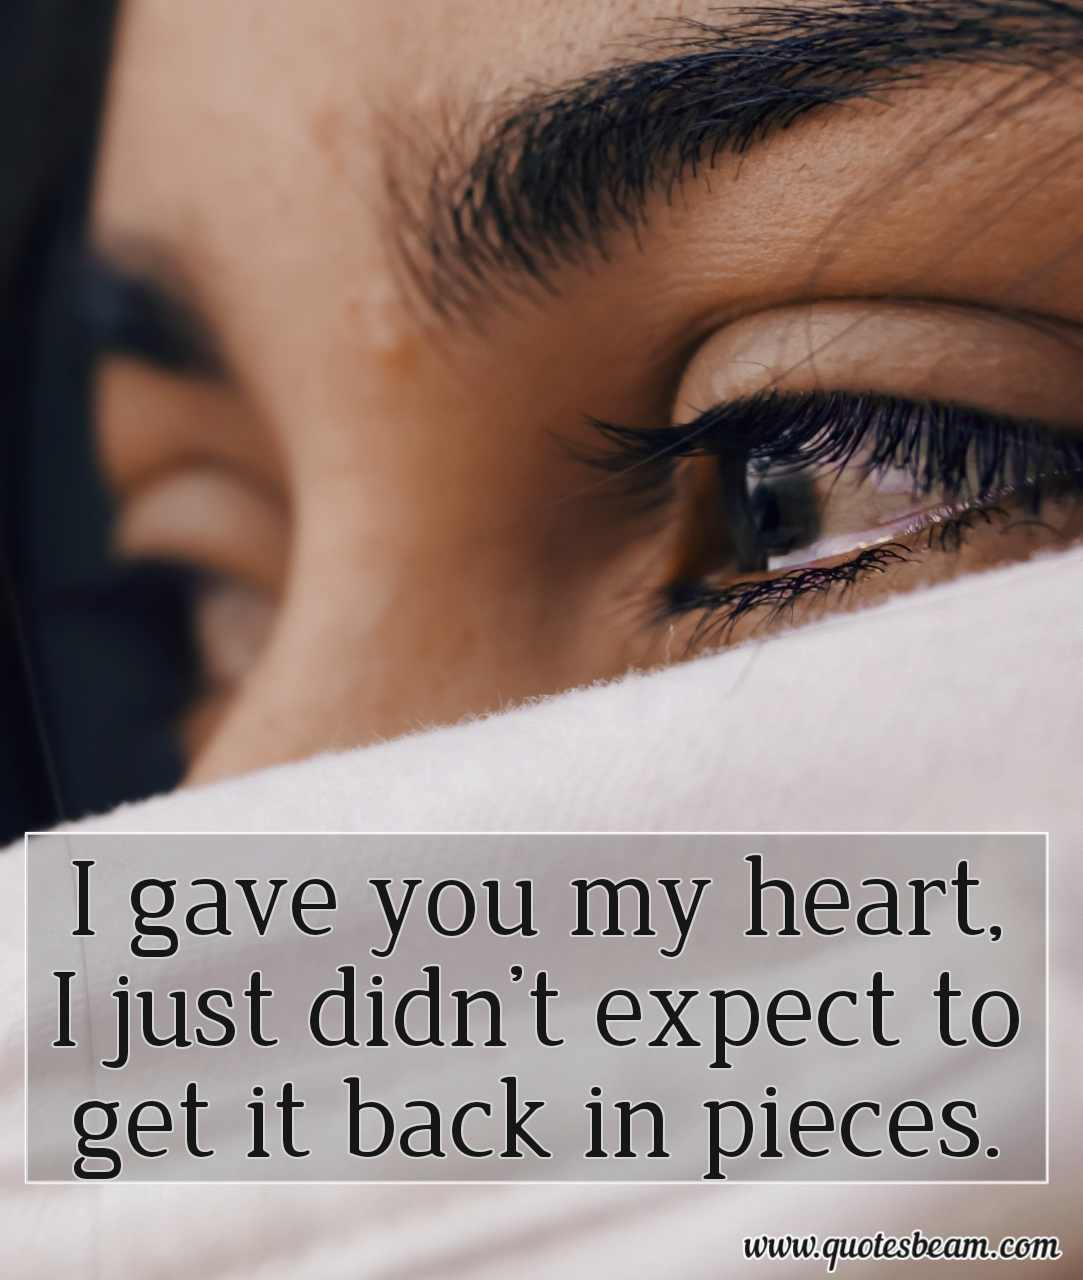 [Sad] Broken Heart Quotes Images  Pictures To Heal Your Broken Heart für Herz Gebrochen Sprüche